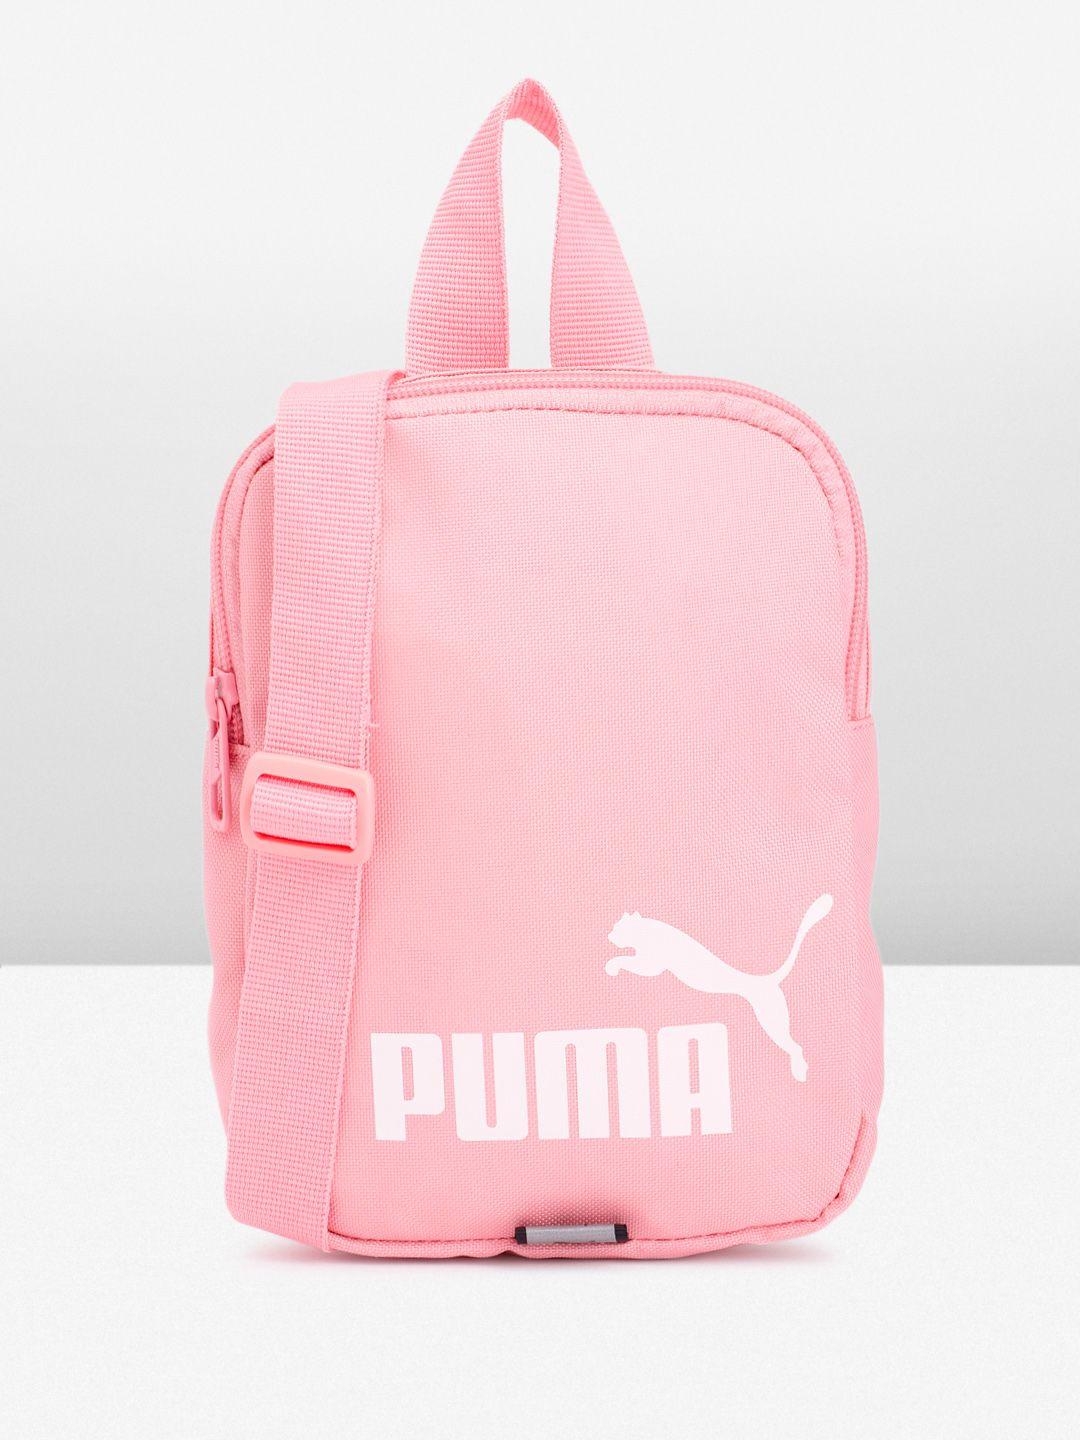 puma unisex brand logo printed structured messenger bag